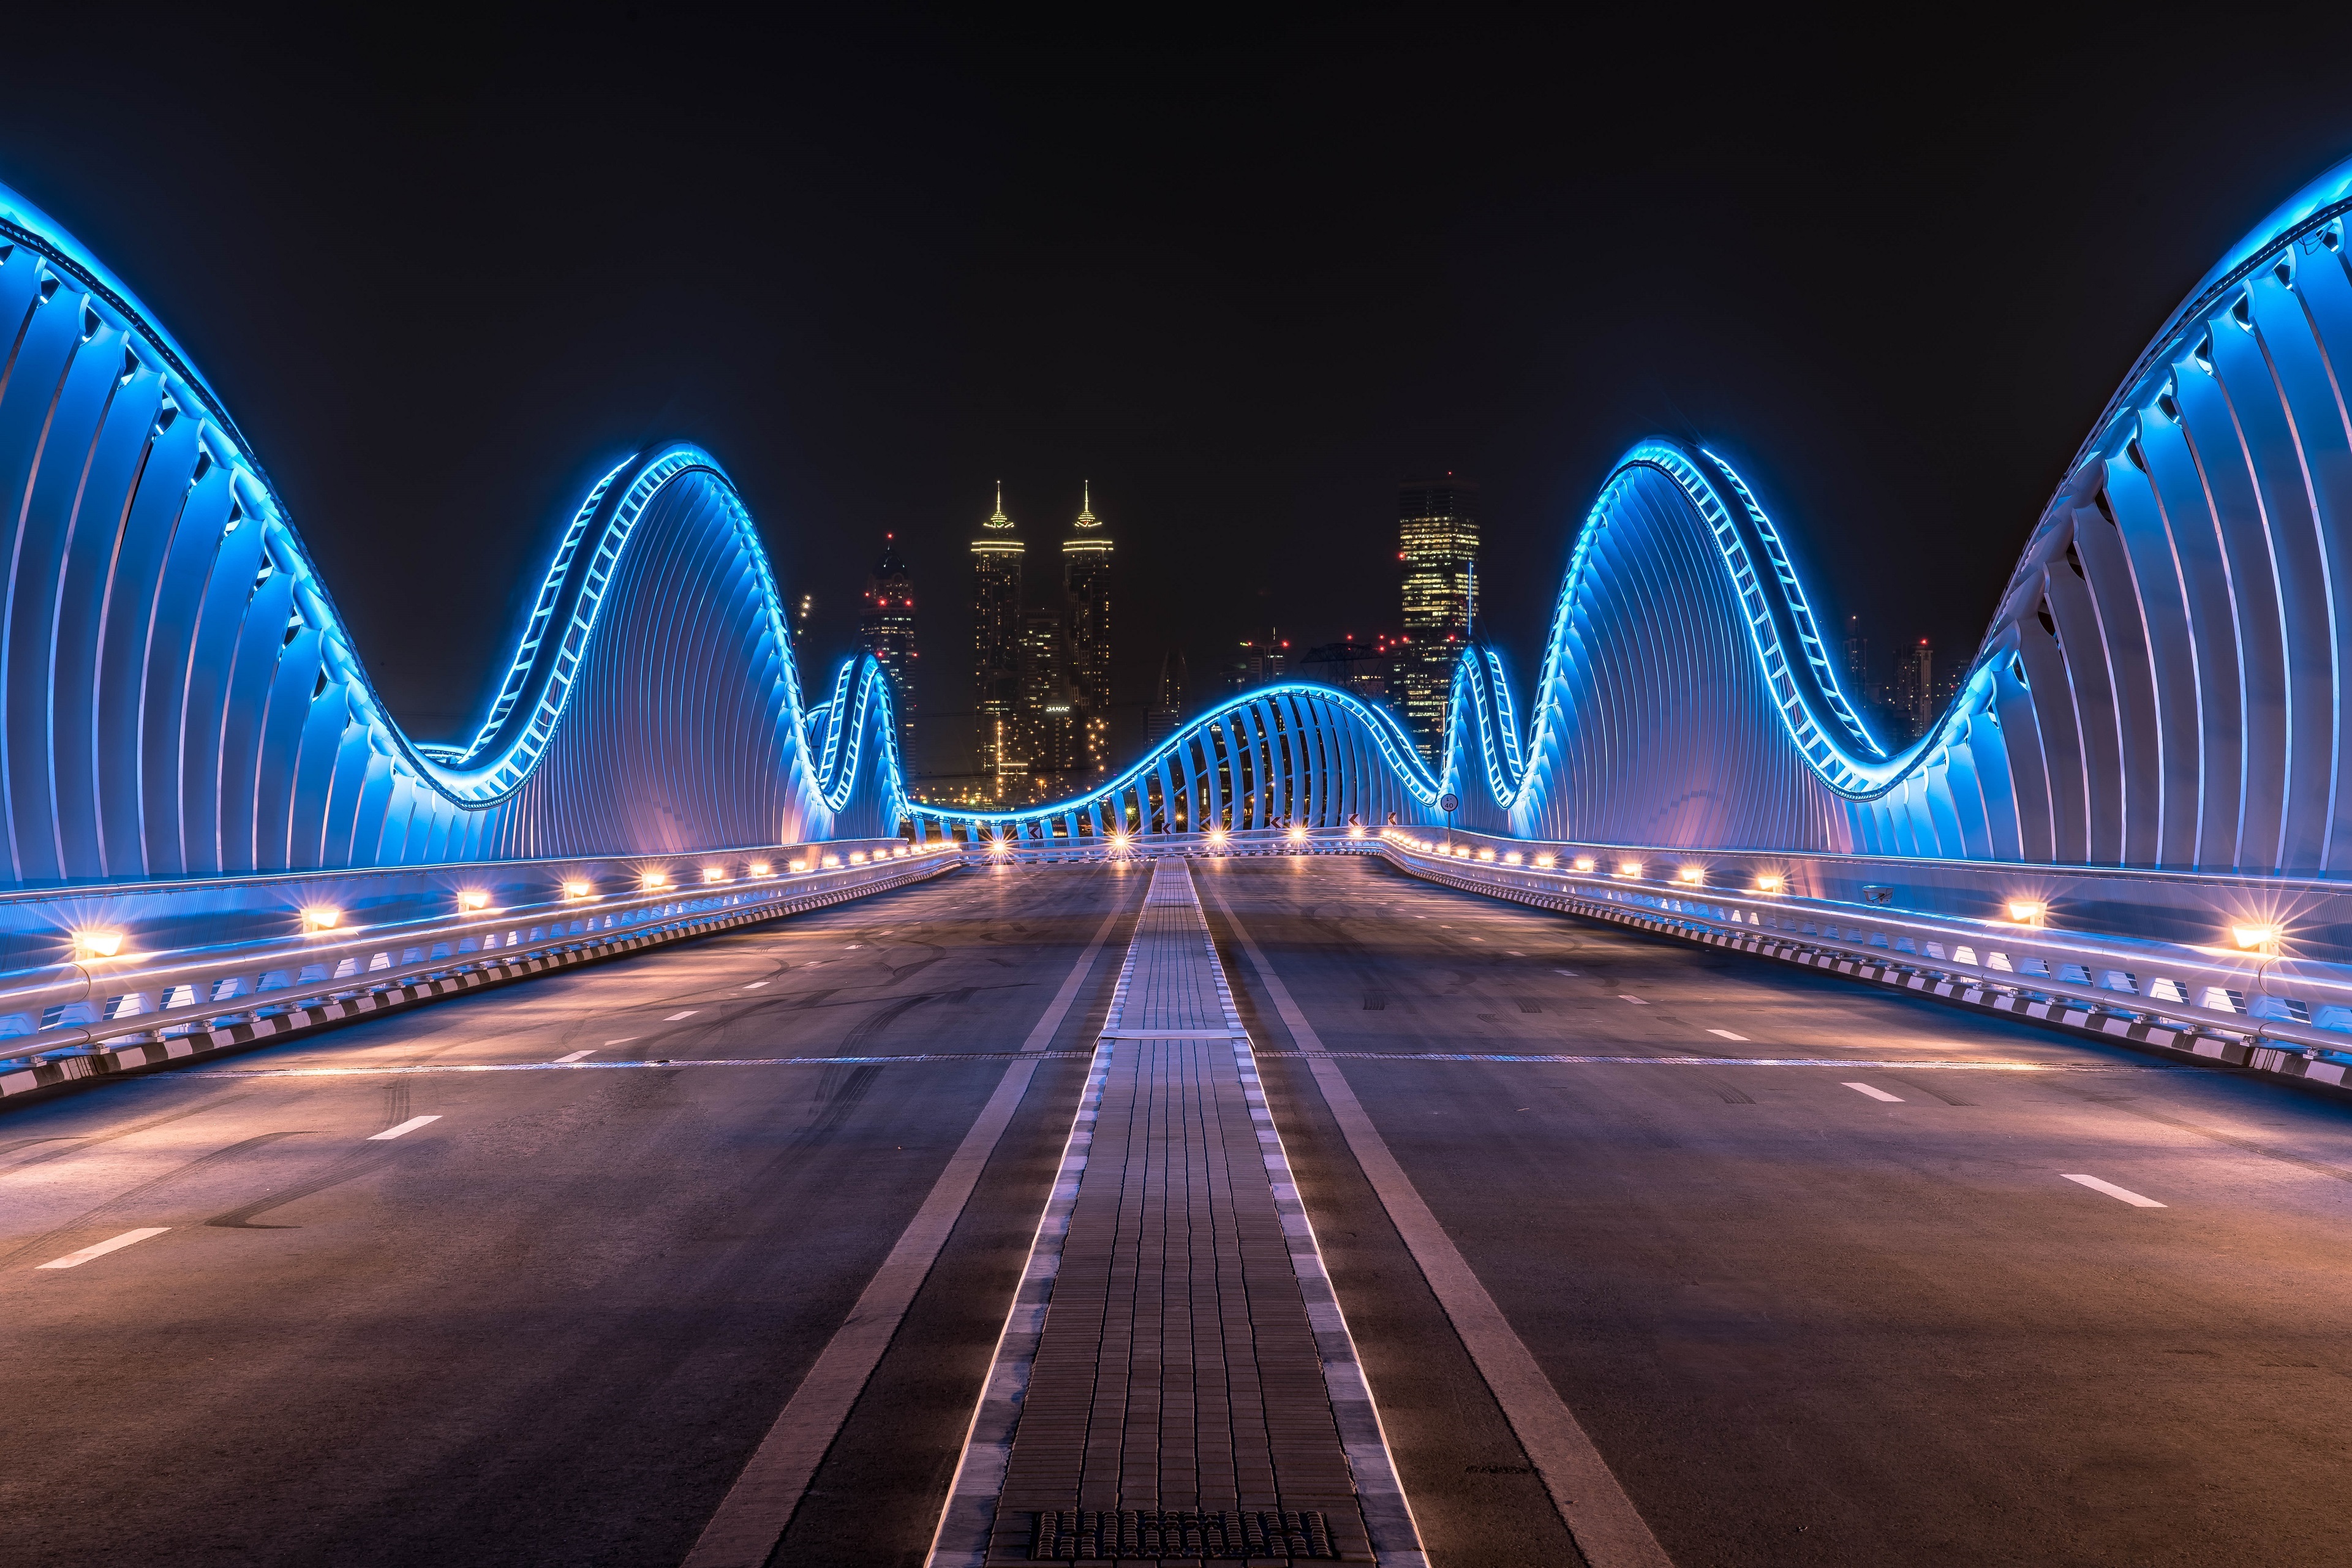 Futuristic Meydan VIP Bridge